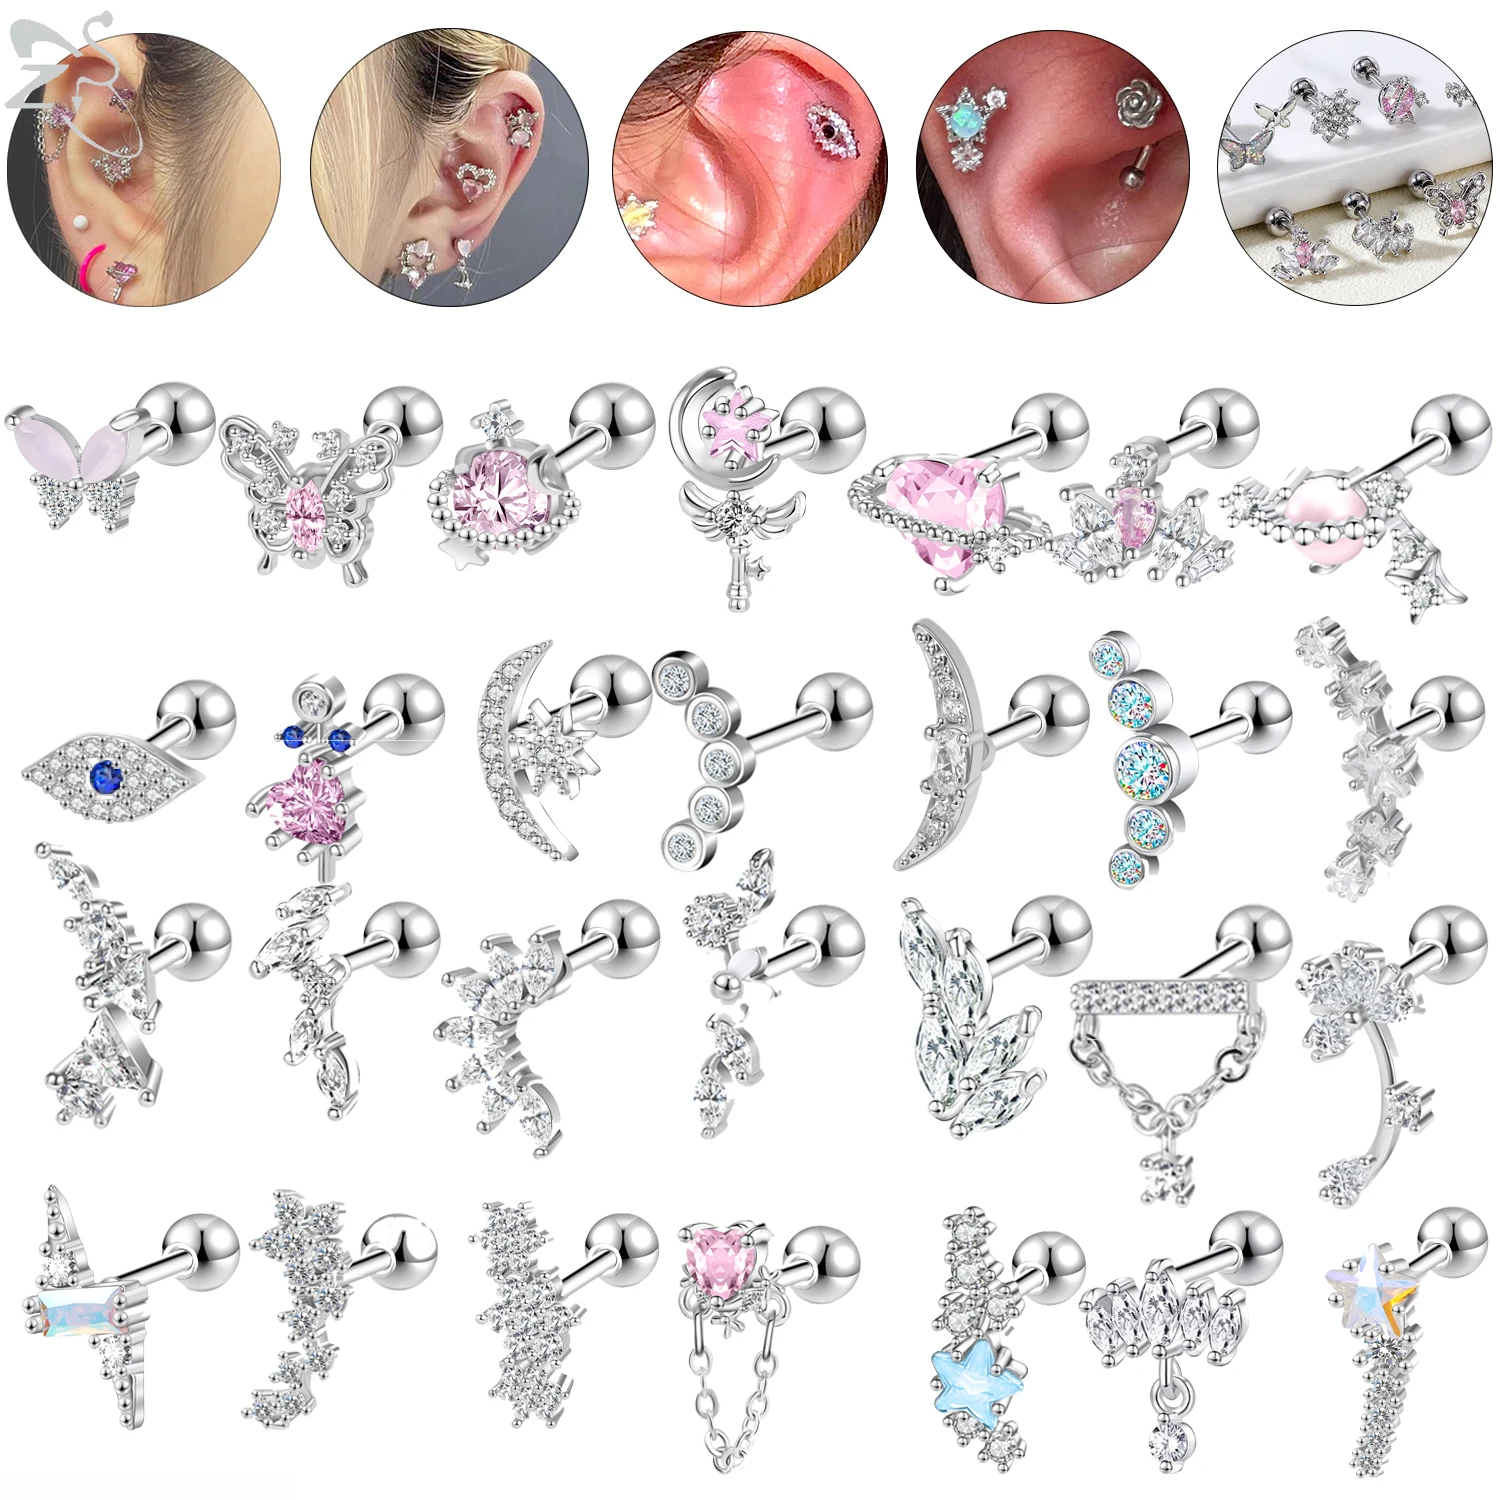 ZS 1PC Butterfly Heart Stud Earrings Stainless Steel CZ Crystal Ear Studs Tiny Cartilage Earrings for Women Conch Helix Piercing